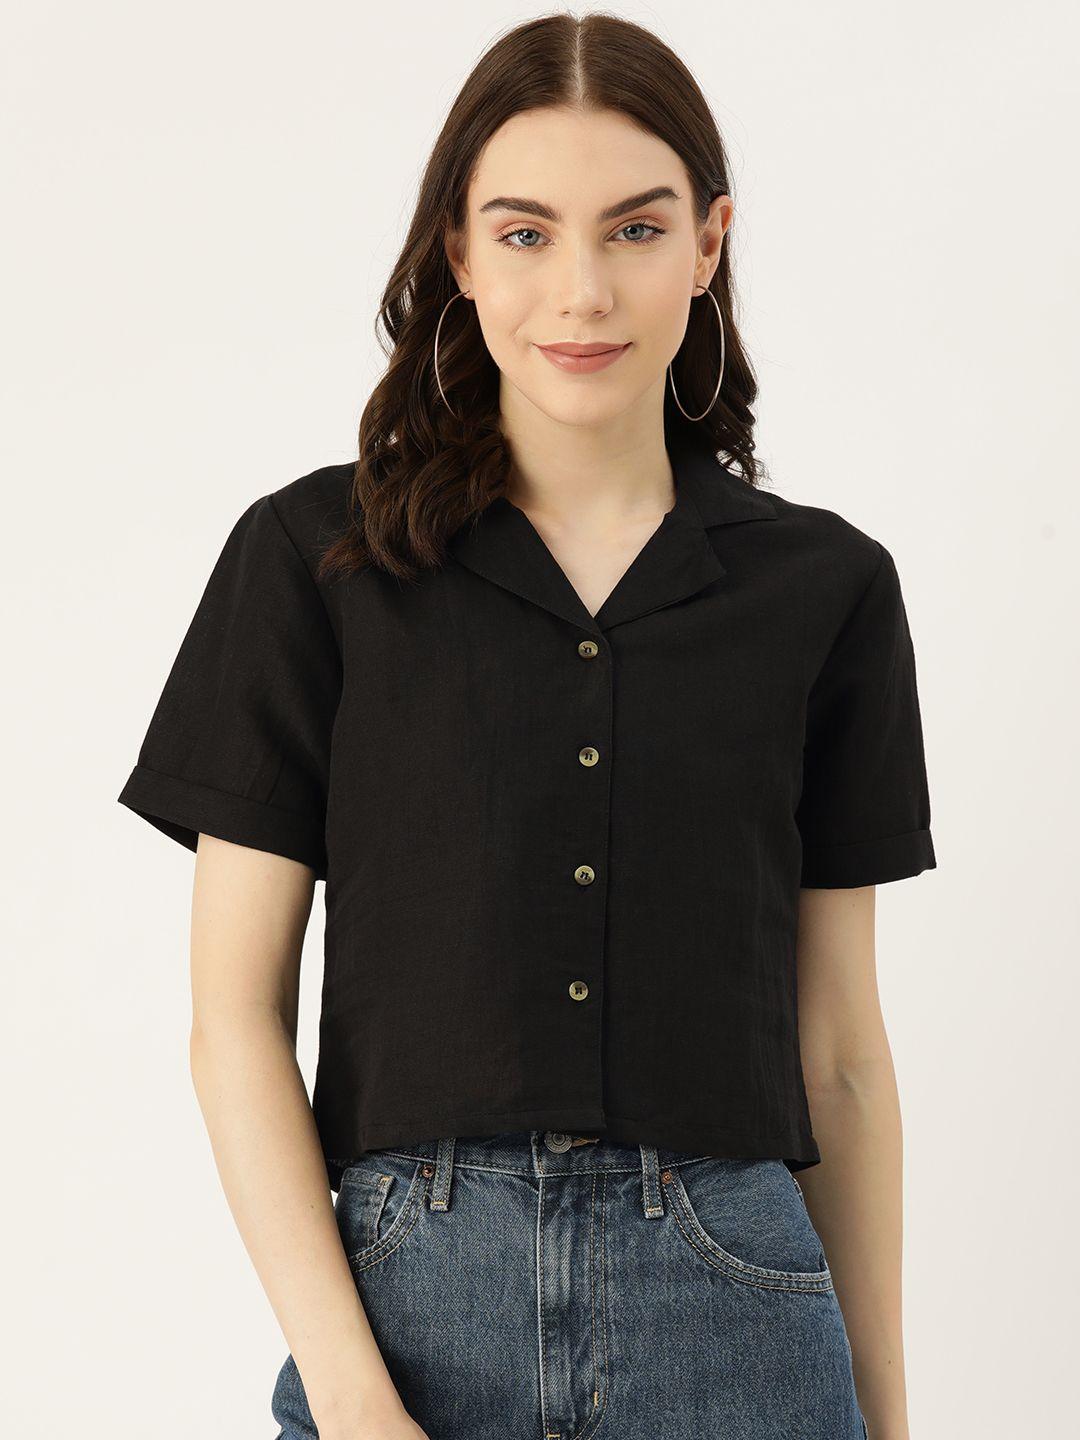 label regalia women solid opaque linen blend casual shirt